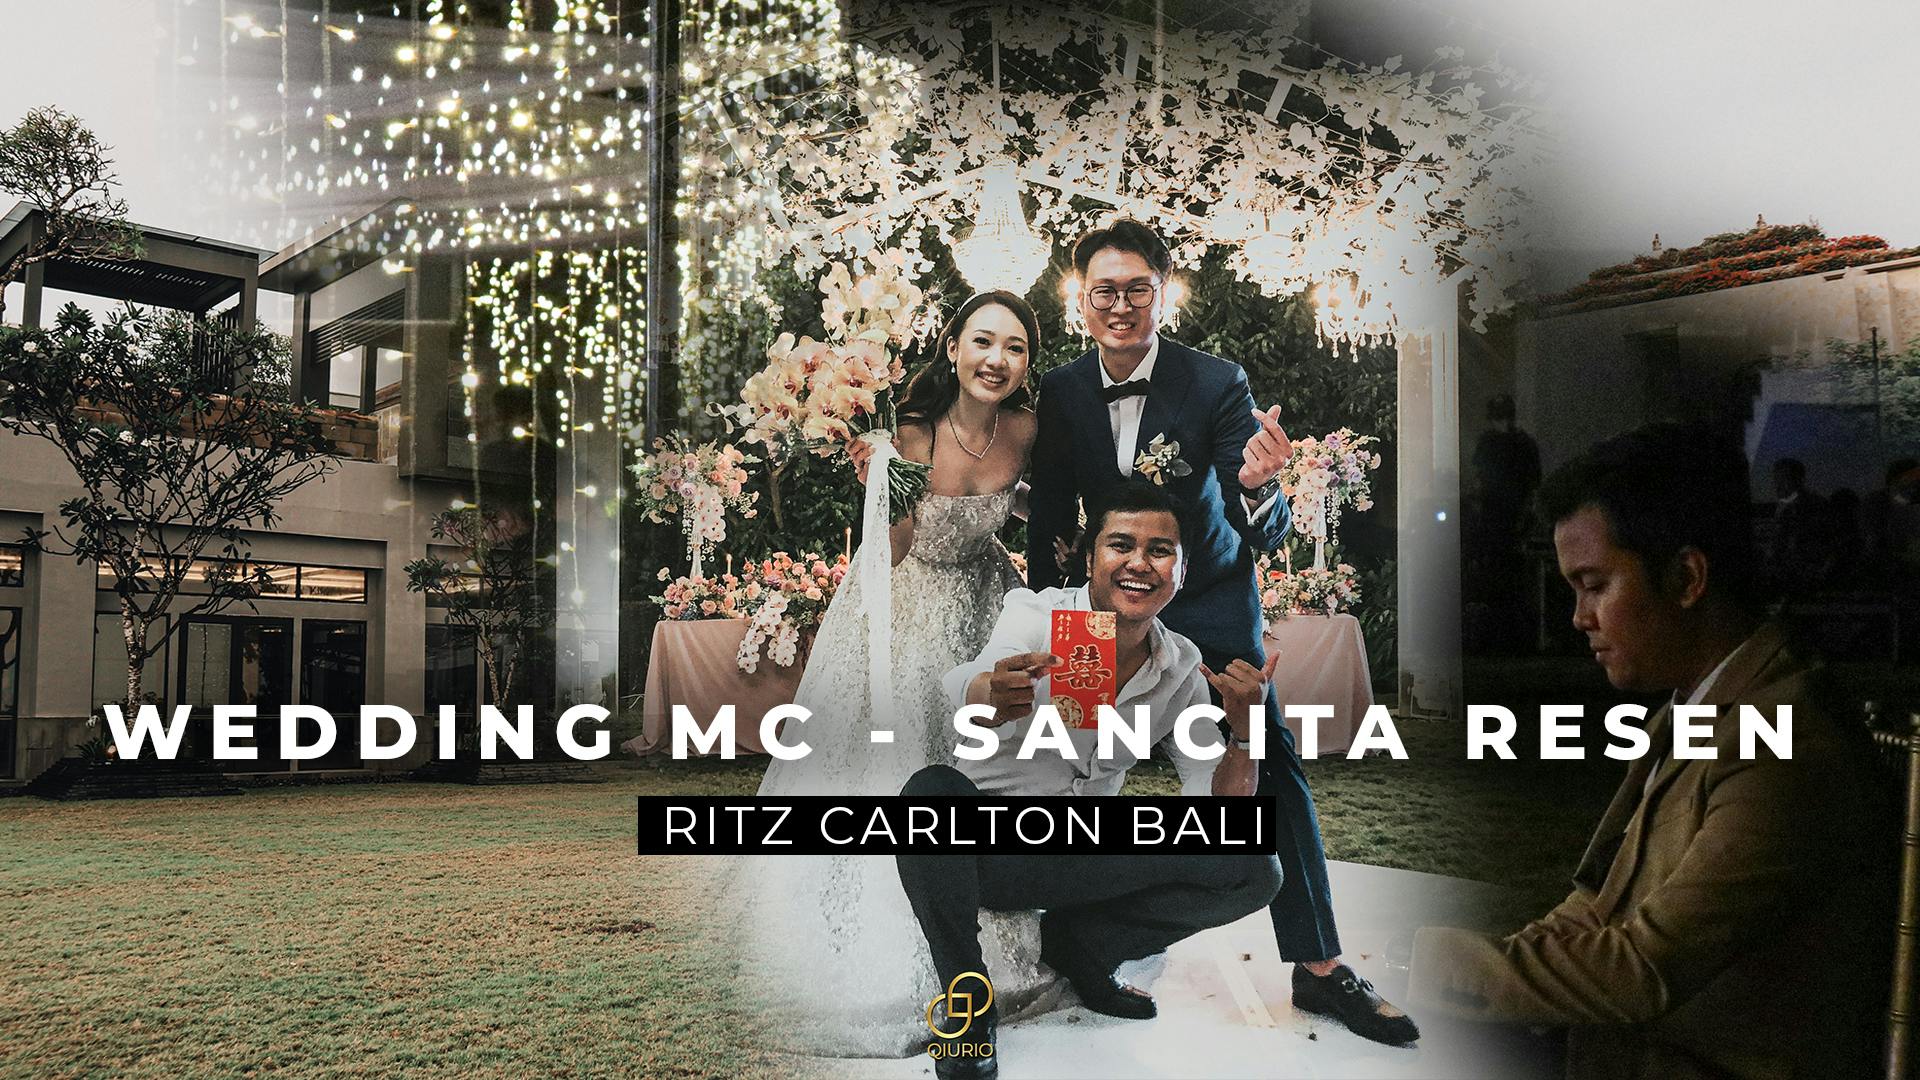 Sancita Resen - Wedding MC @The Ritz Carlton